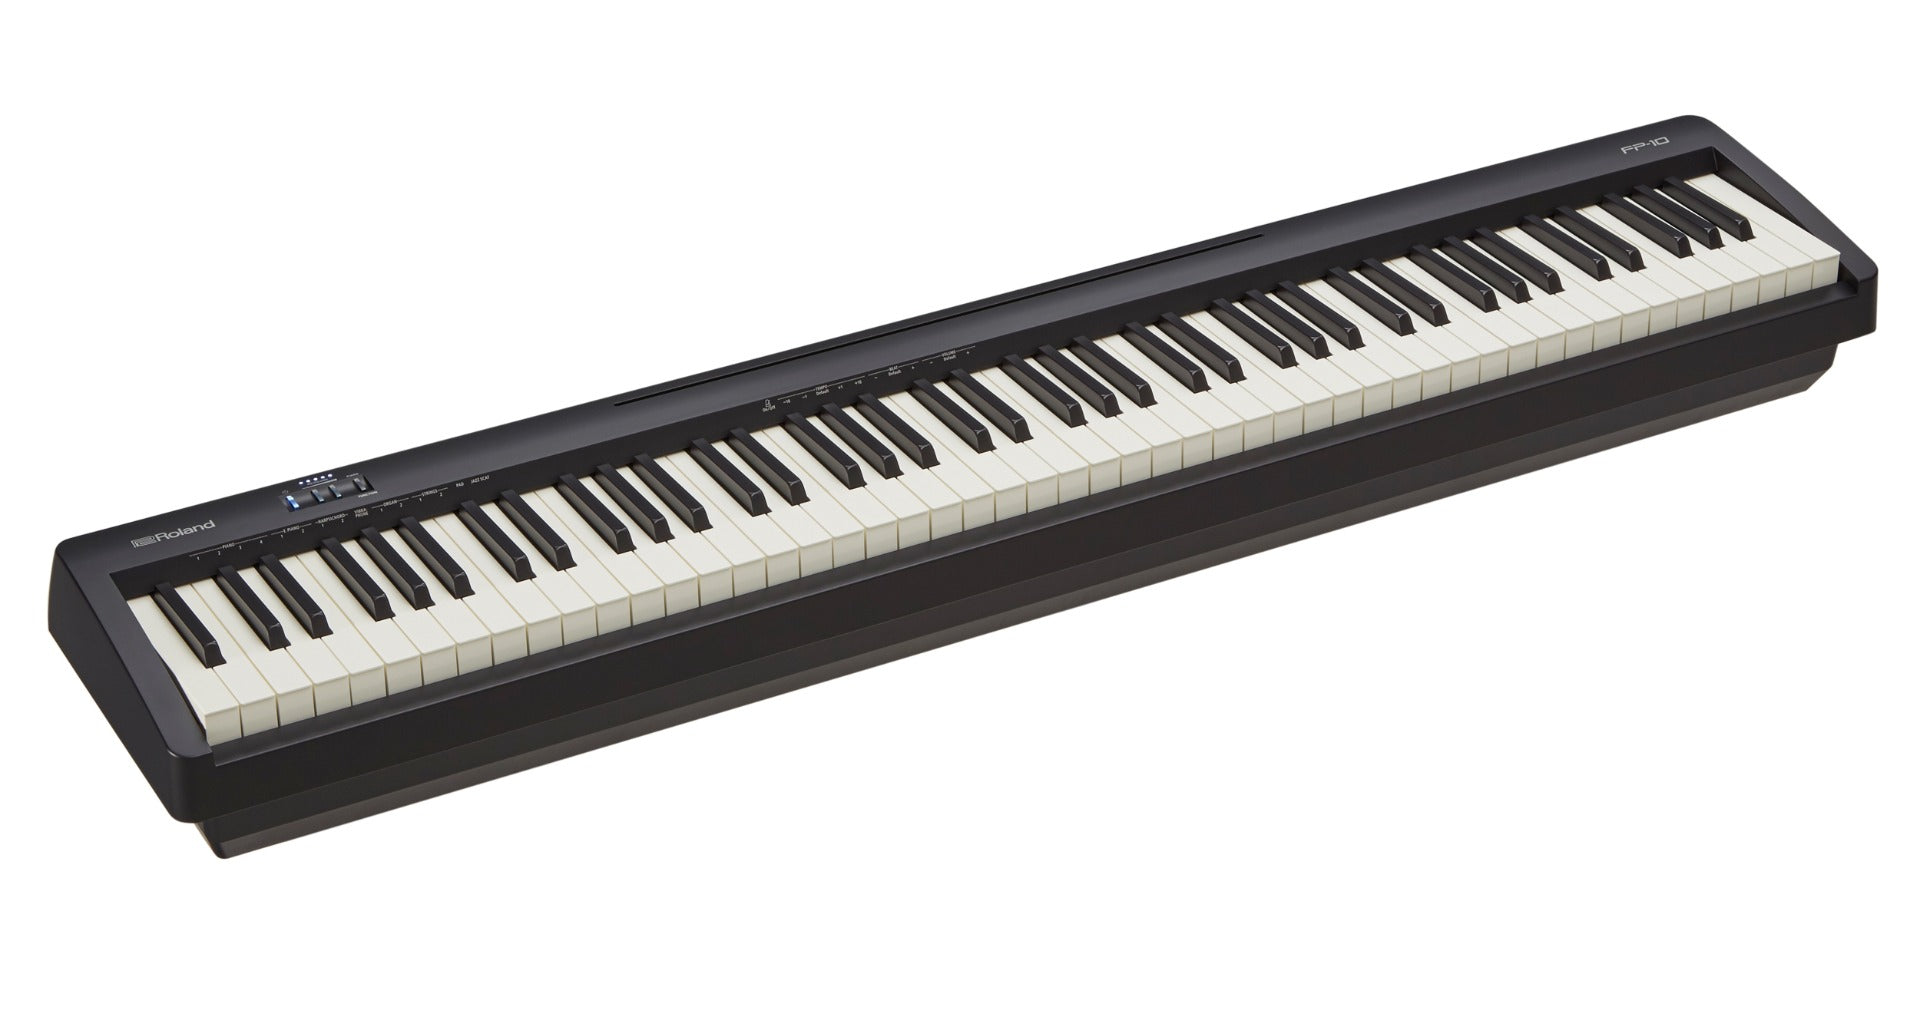 Roland FP-10 Digital Piano - Black